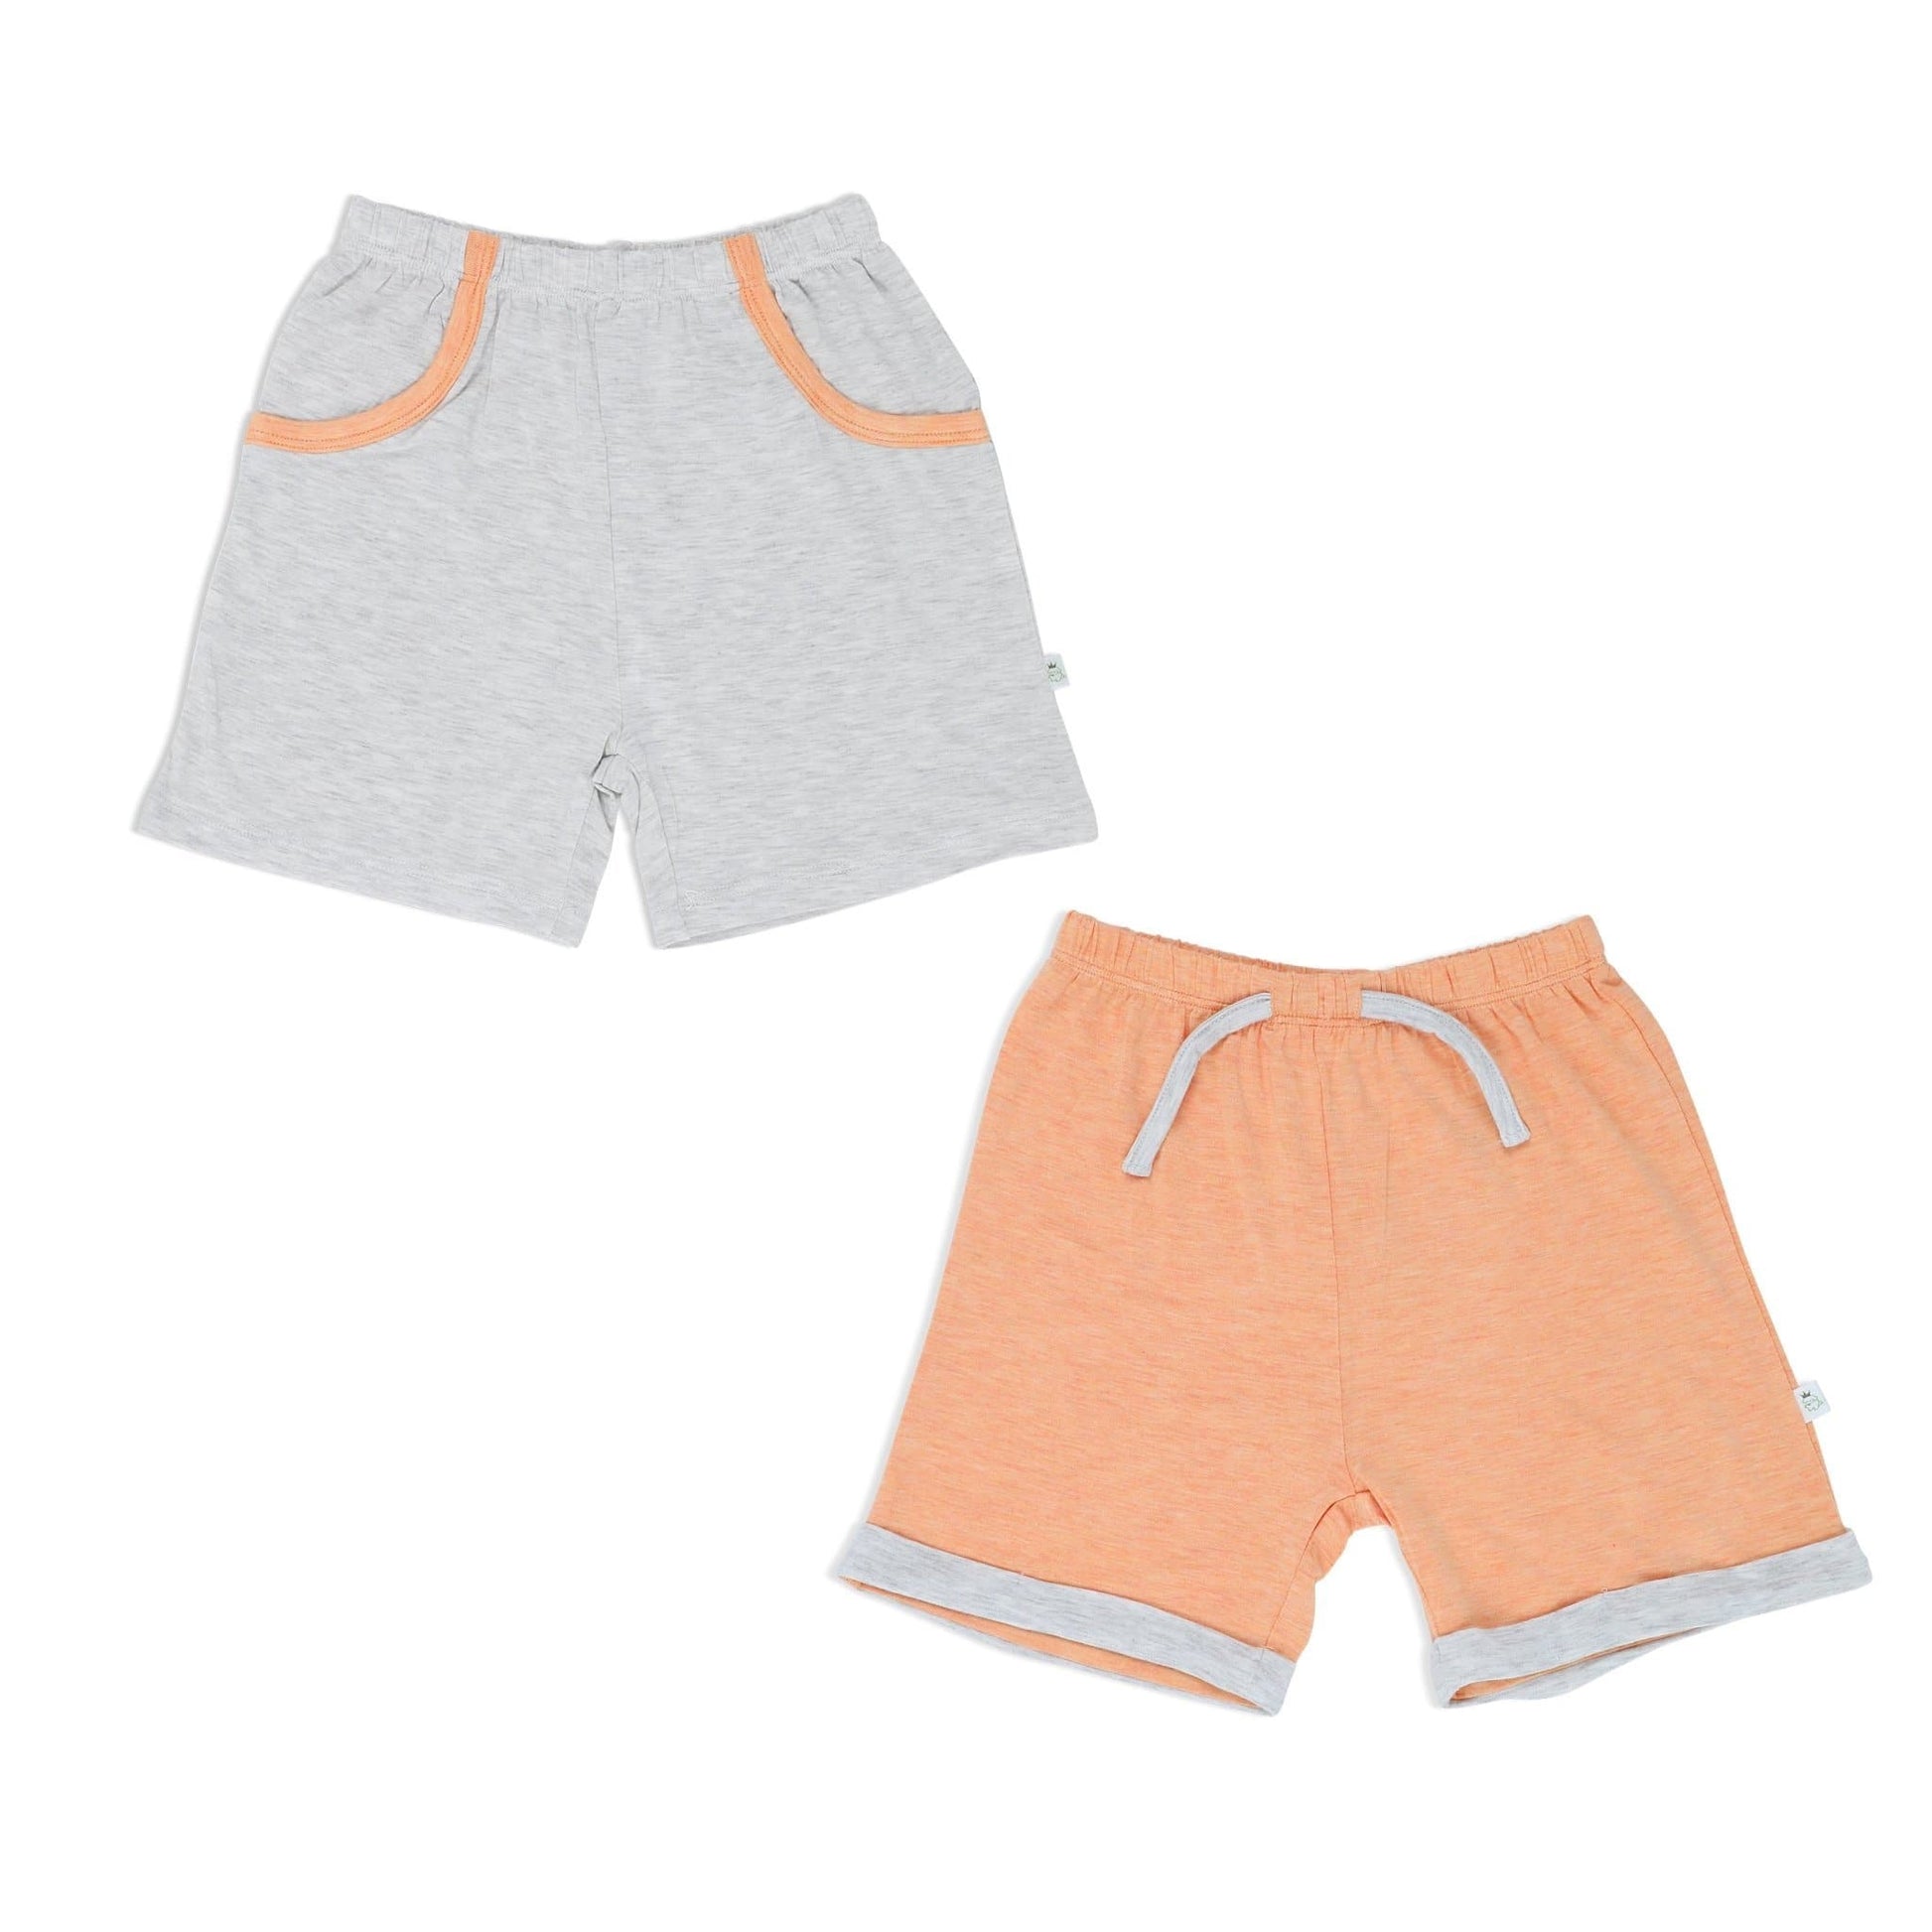 Boys - Shorts with Mocked Pocket/Drawstring (Sandwash Grey & Orange) - Simply Life